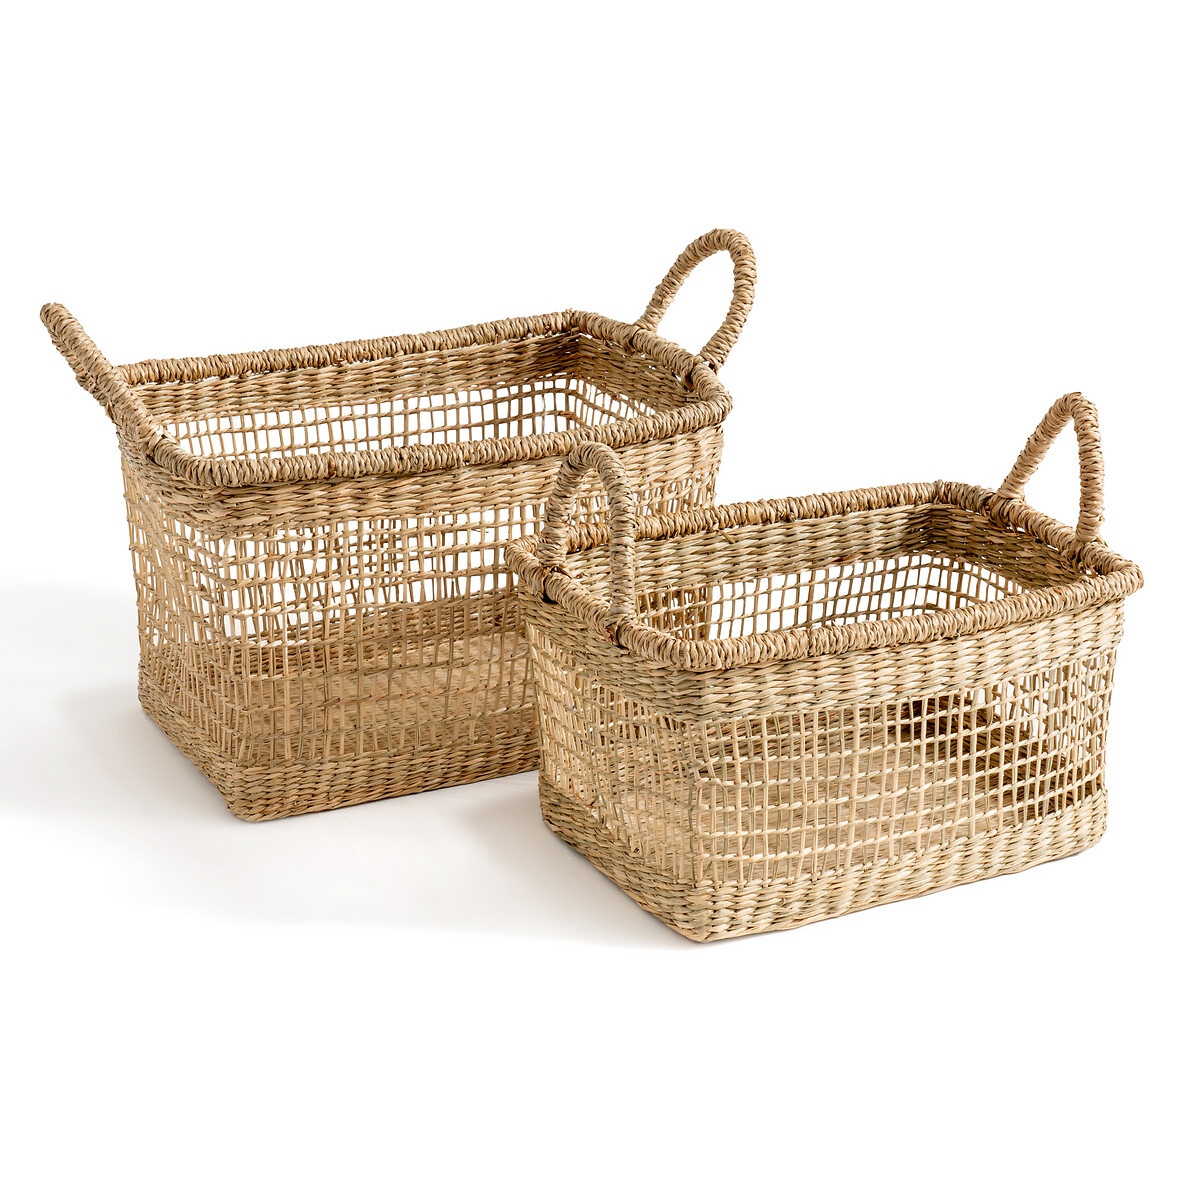 Spacio narrow woven straw laundry basket, natural, La Redoute